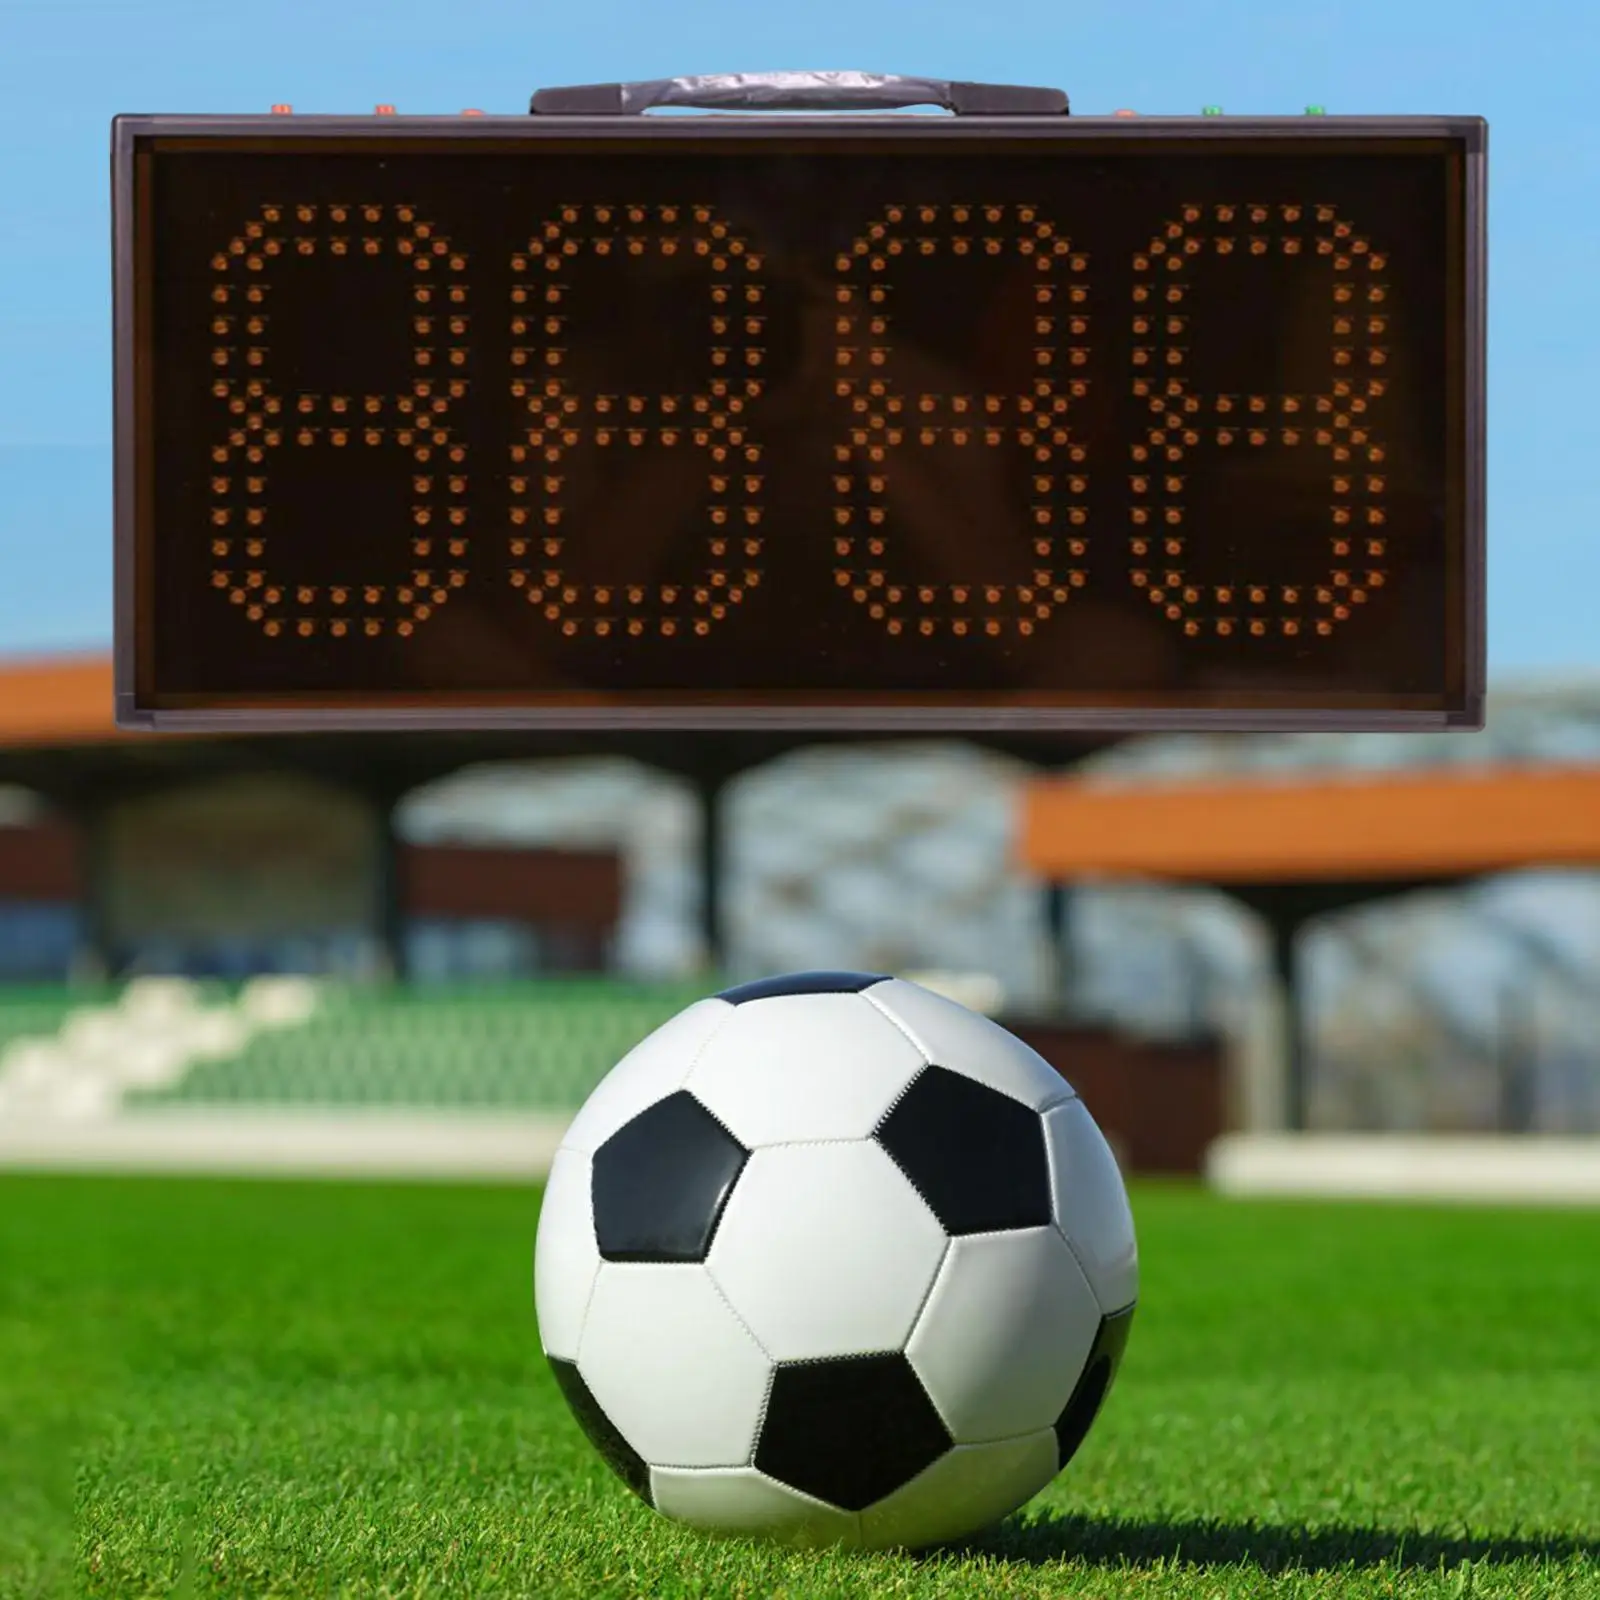 Portable Electronic Digital Scoreboard Score Keeper for Soccer Volleyball